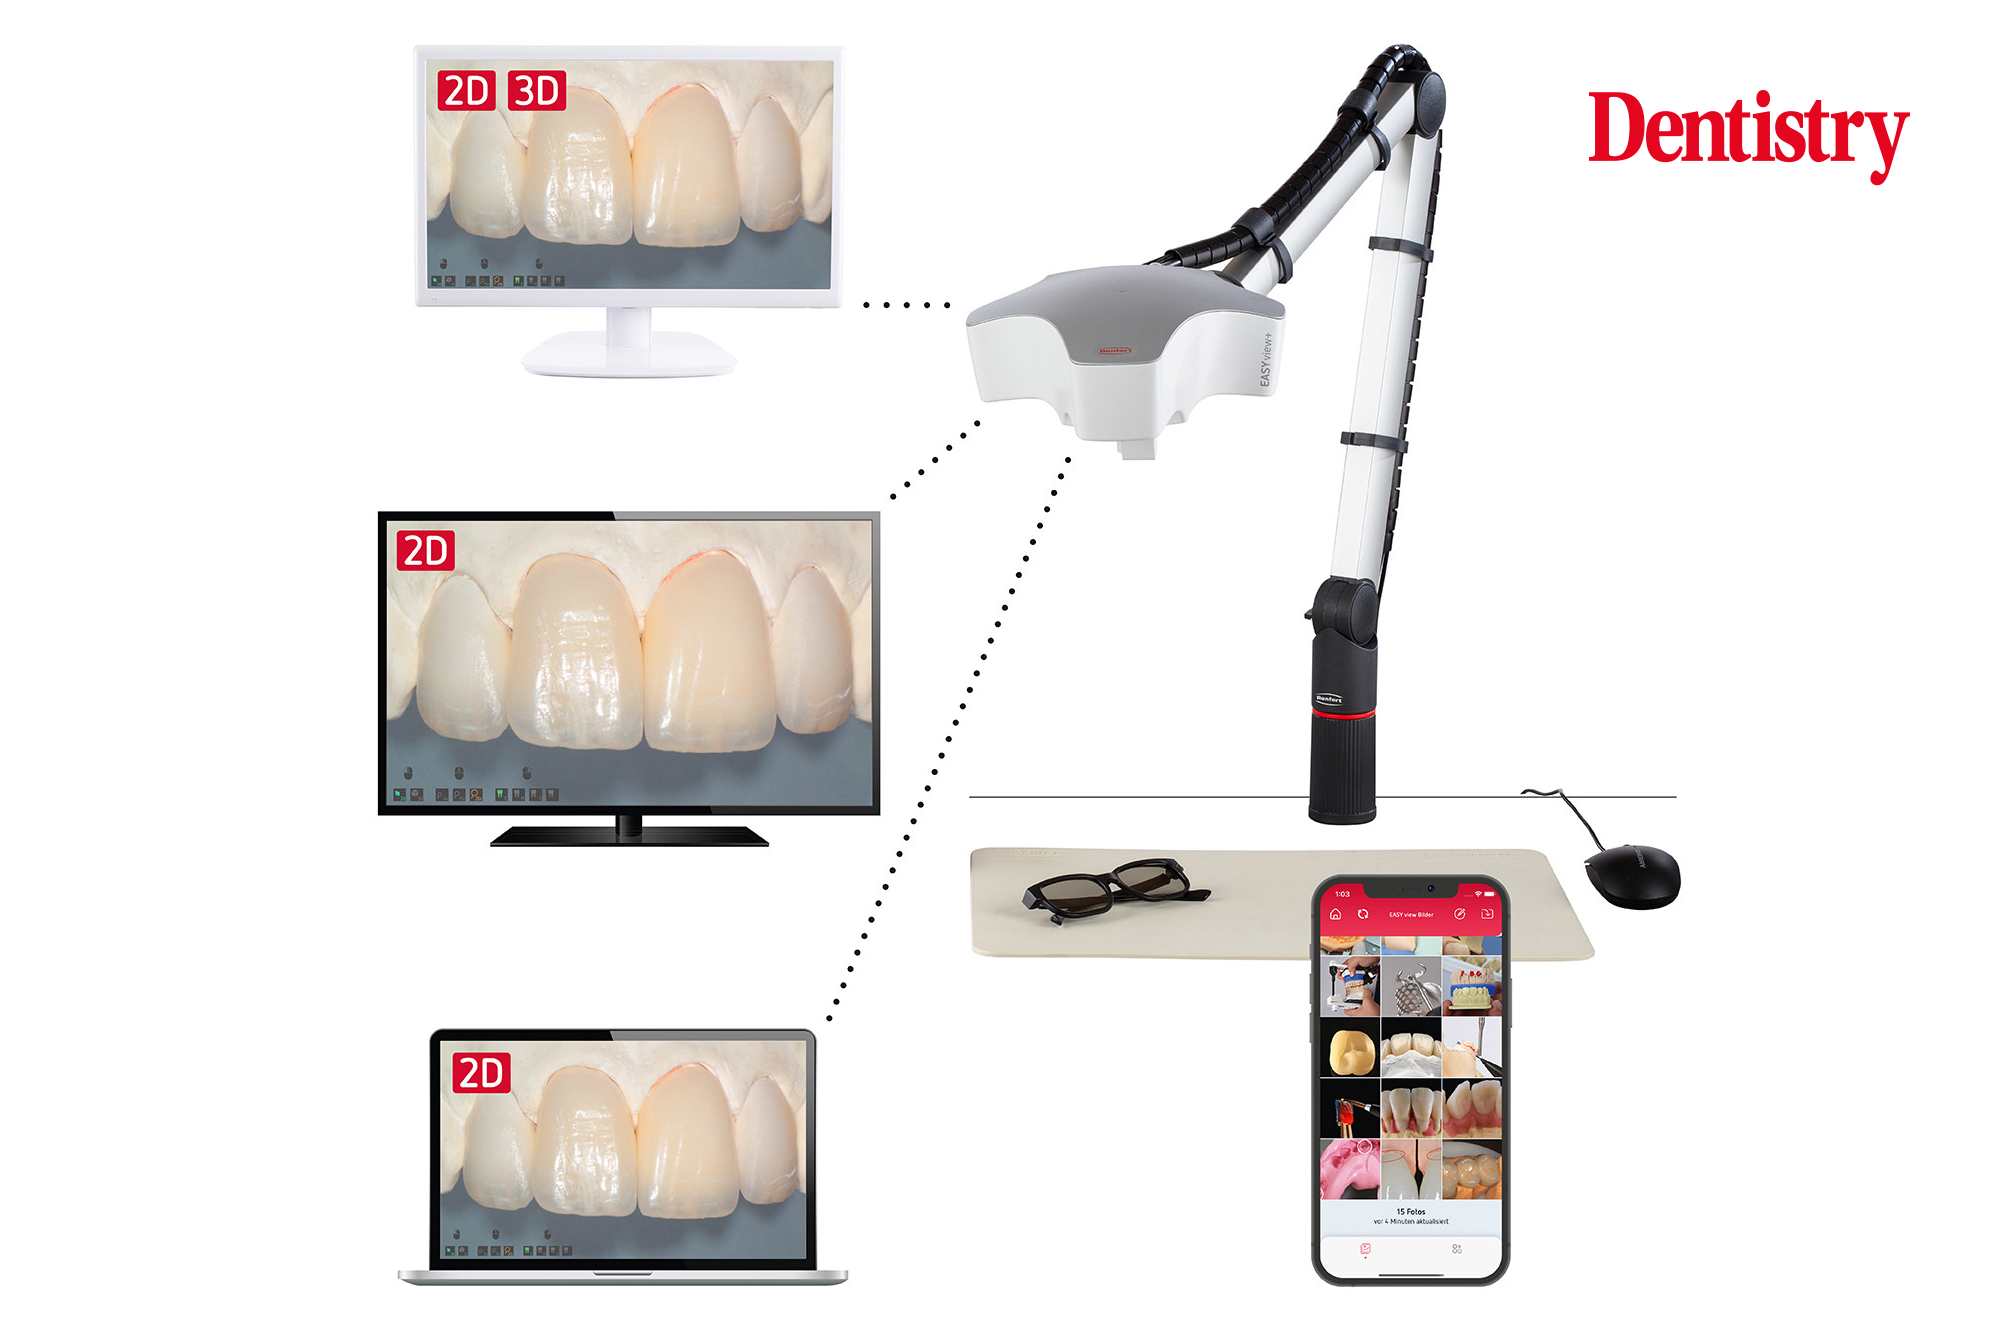 renfert's dental visual communicator